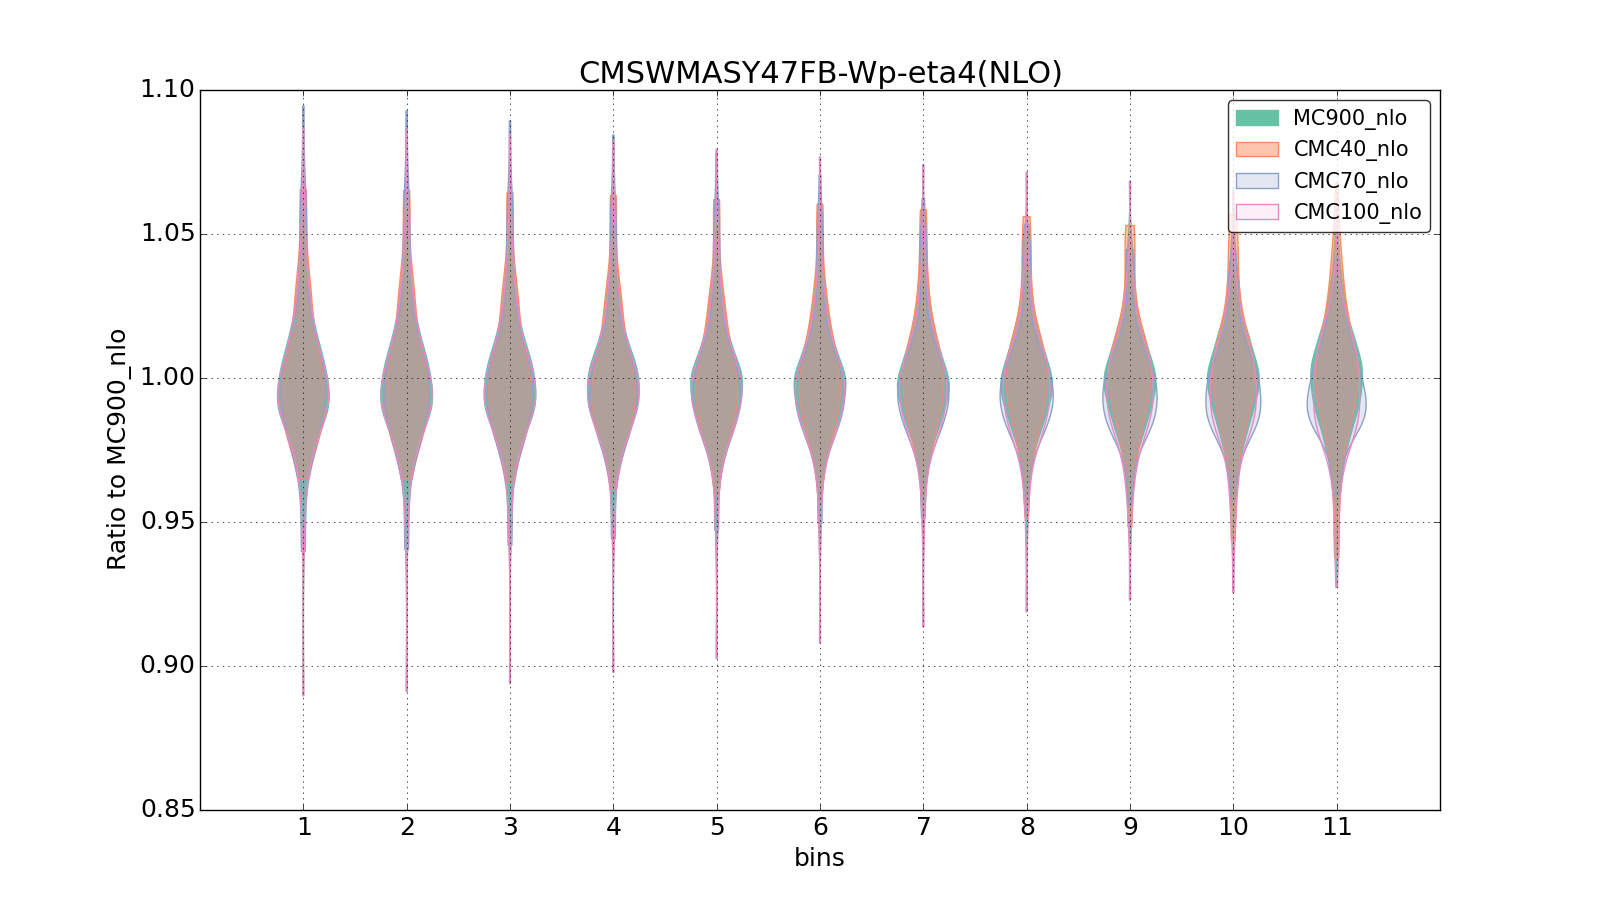 figure plots/CMCpheno/group_1_violinplot_CMSWMASY47FB-Wp-eta4(NLO).png